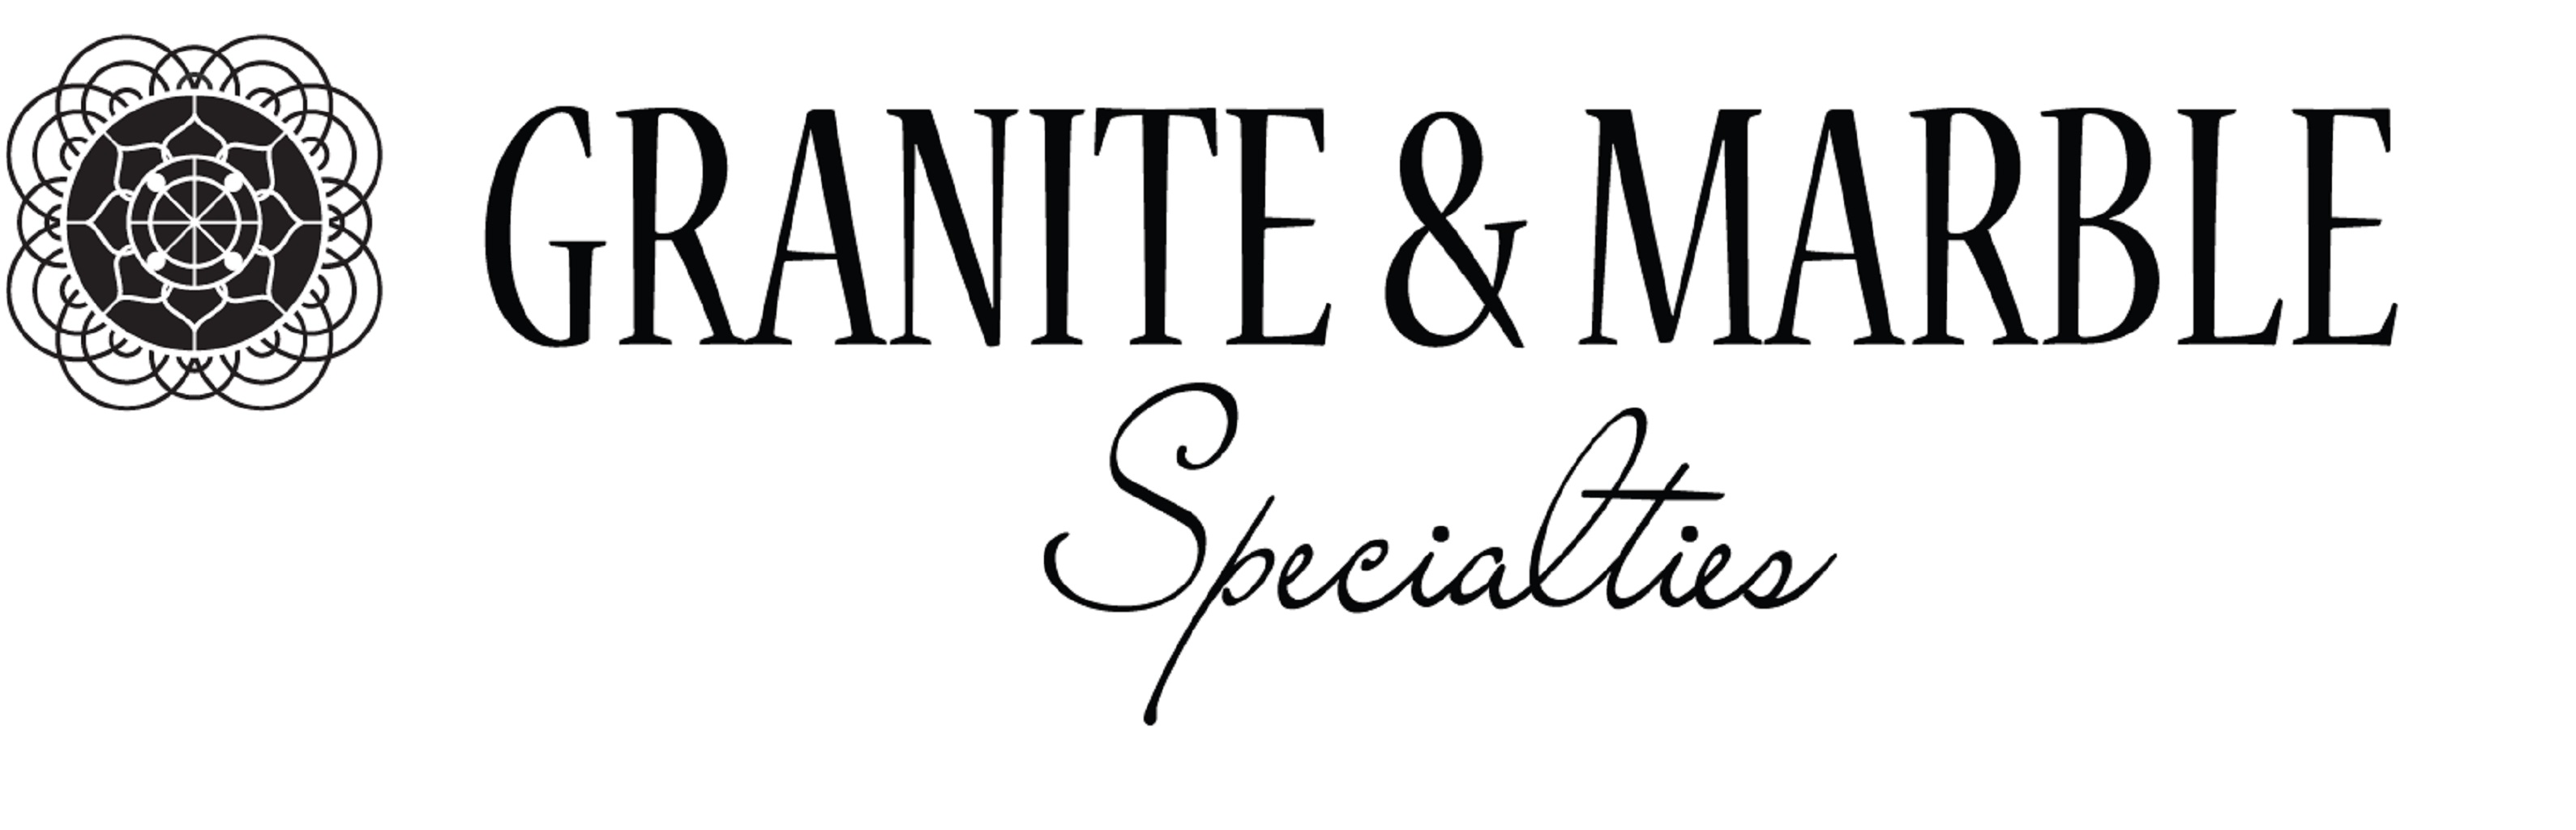 Granite and Marble Specialties, Inc. Logo